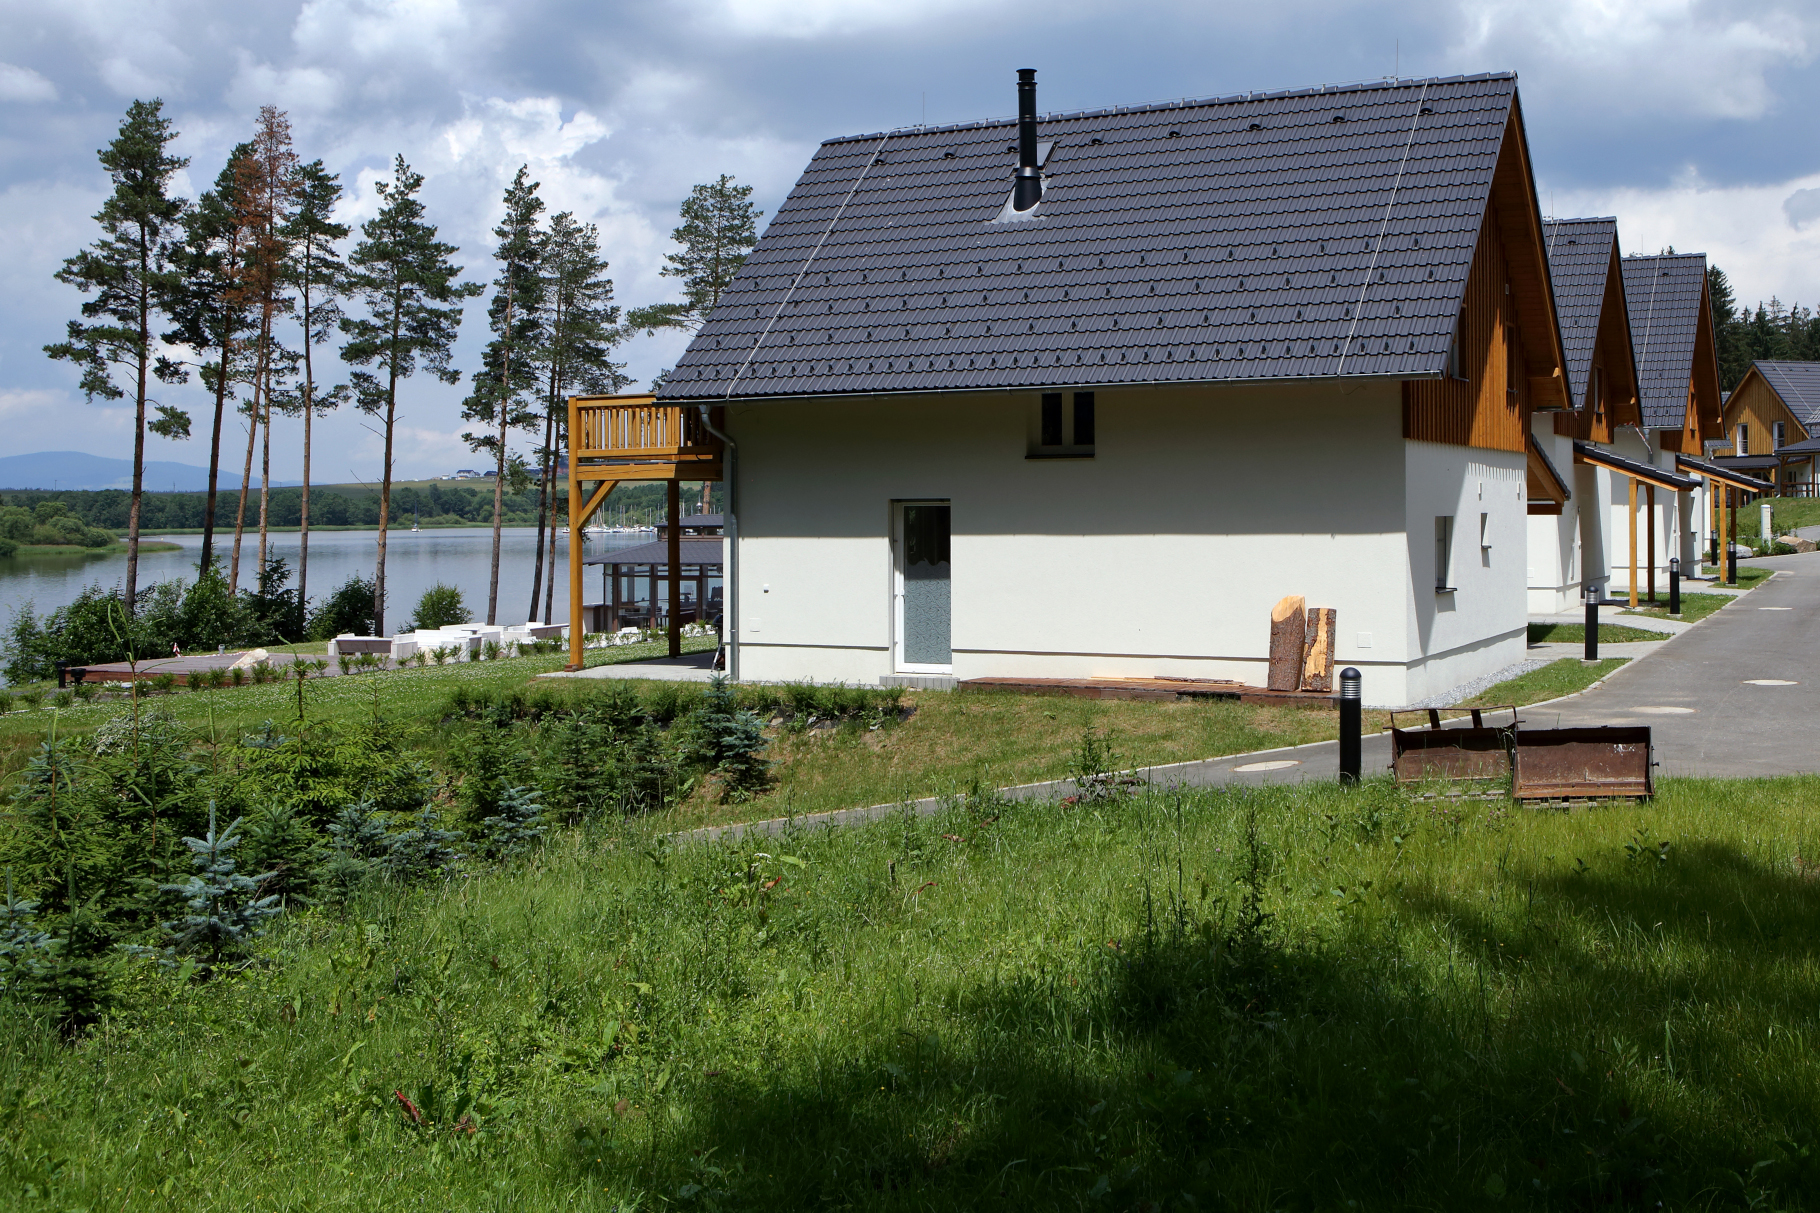 Lakeside Village Lipno nad Vltavou - Budownictwo lądowe naziemne